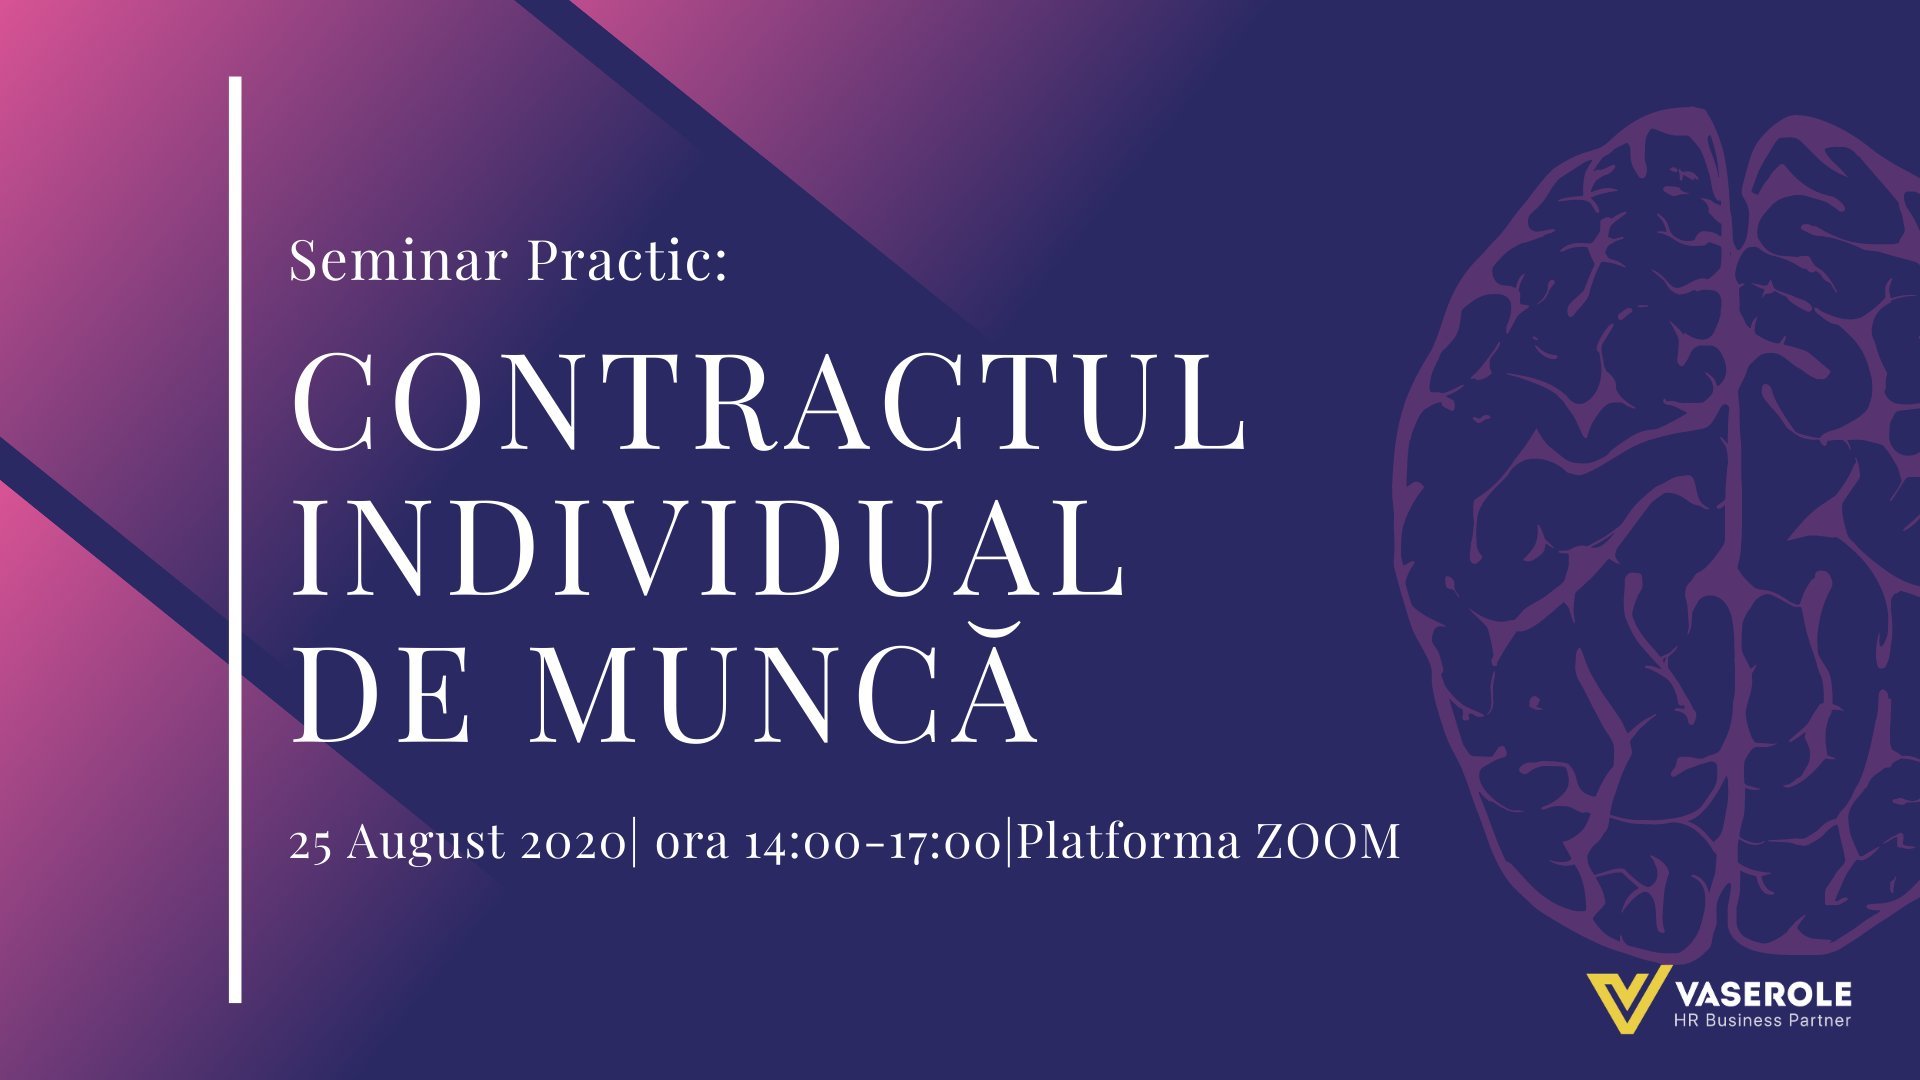 Seminar practic: CONTRACTUL INDIVIDUAL DE MUNCA